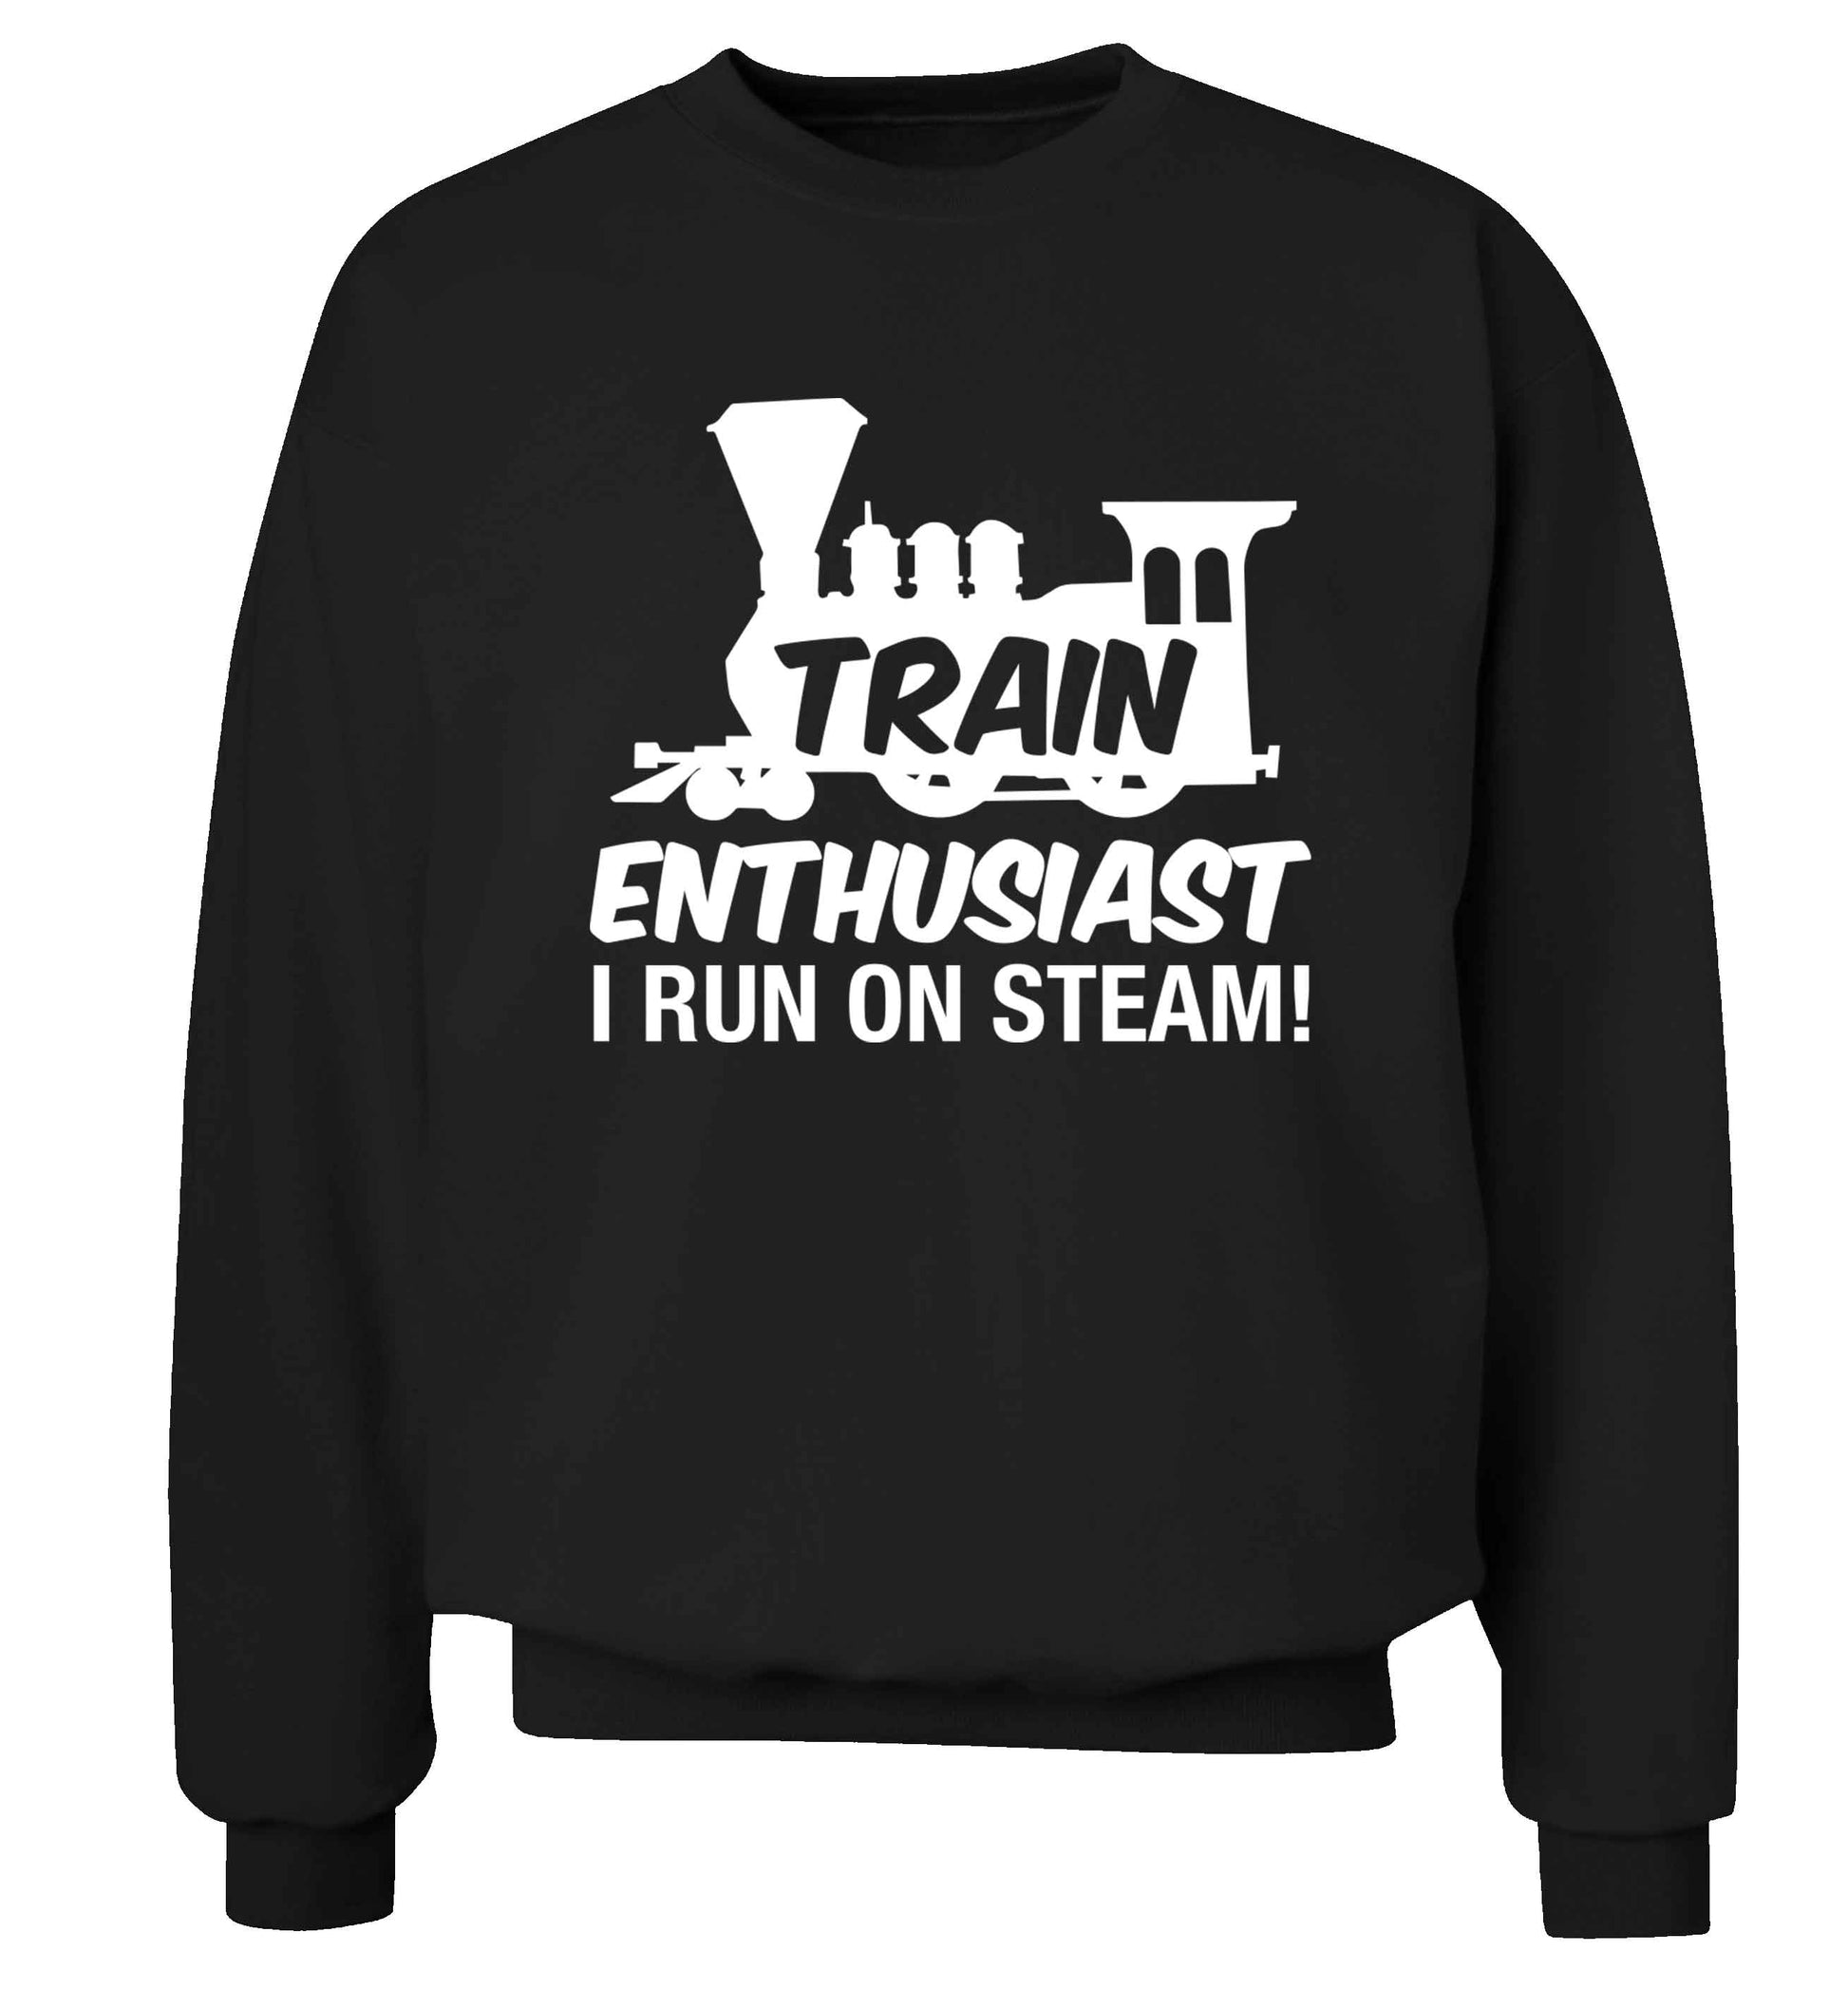 Train enthusiast I run on steam Adult's unisex black Sweater 2XL